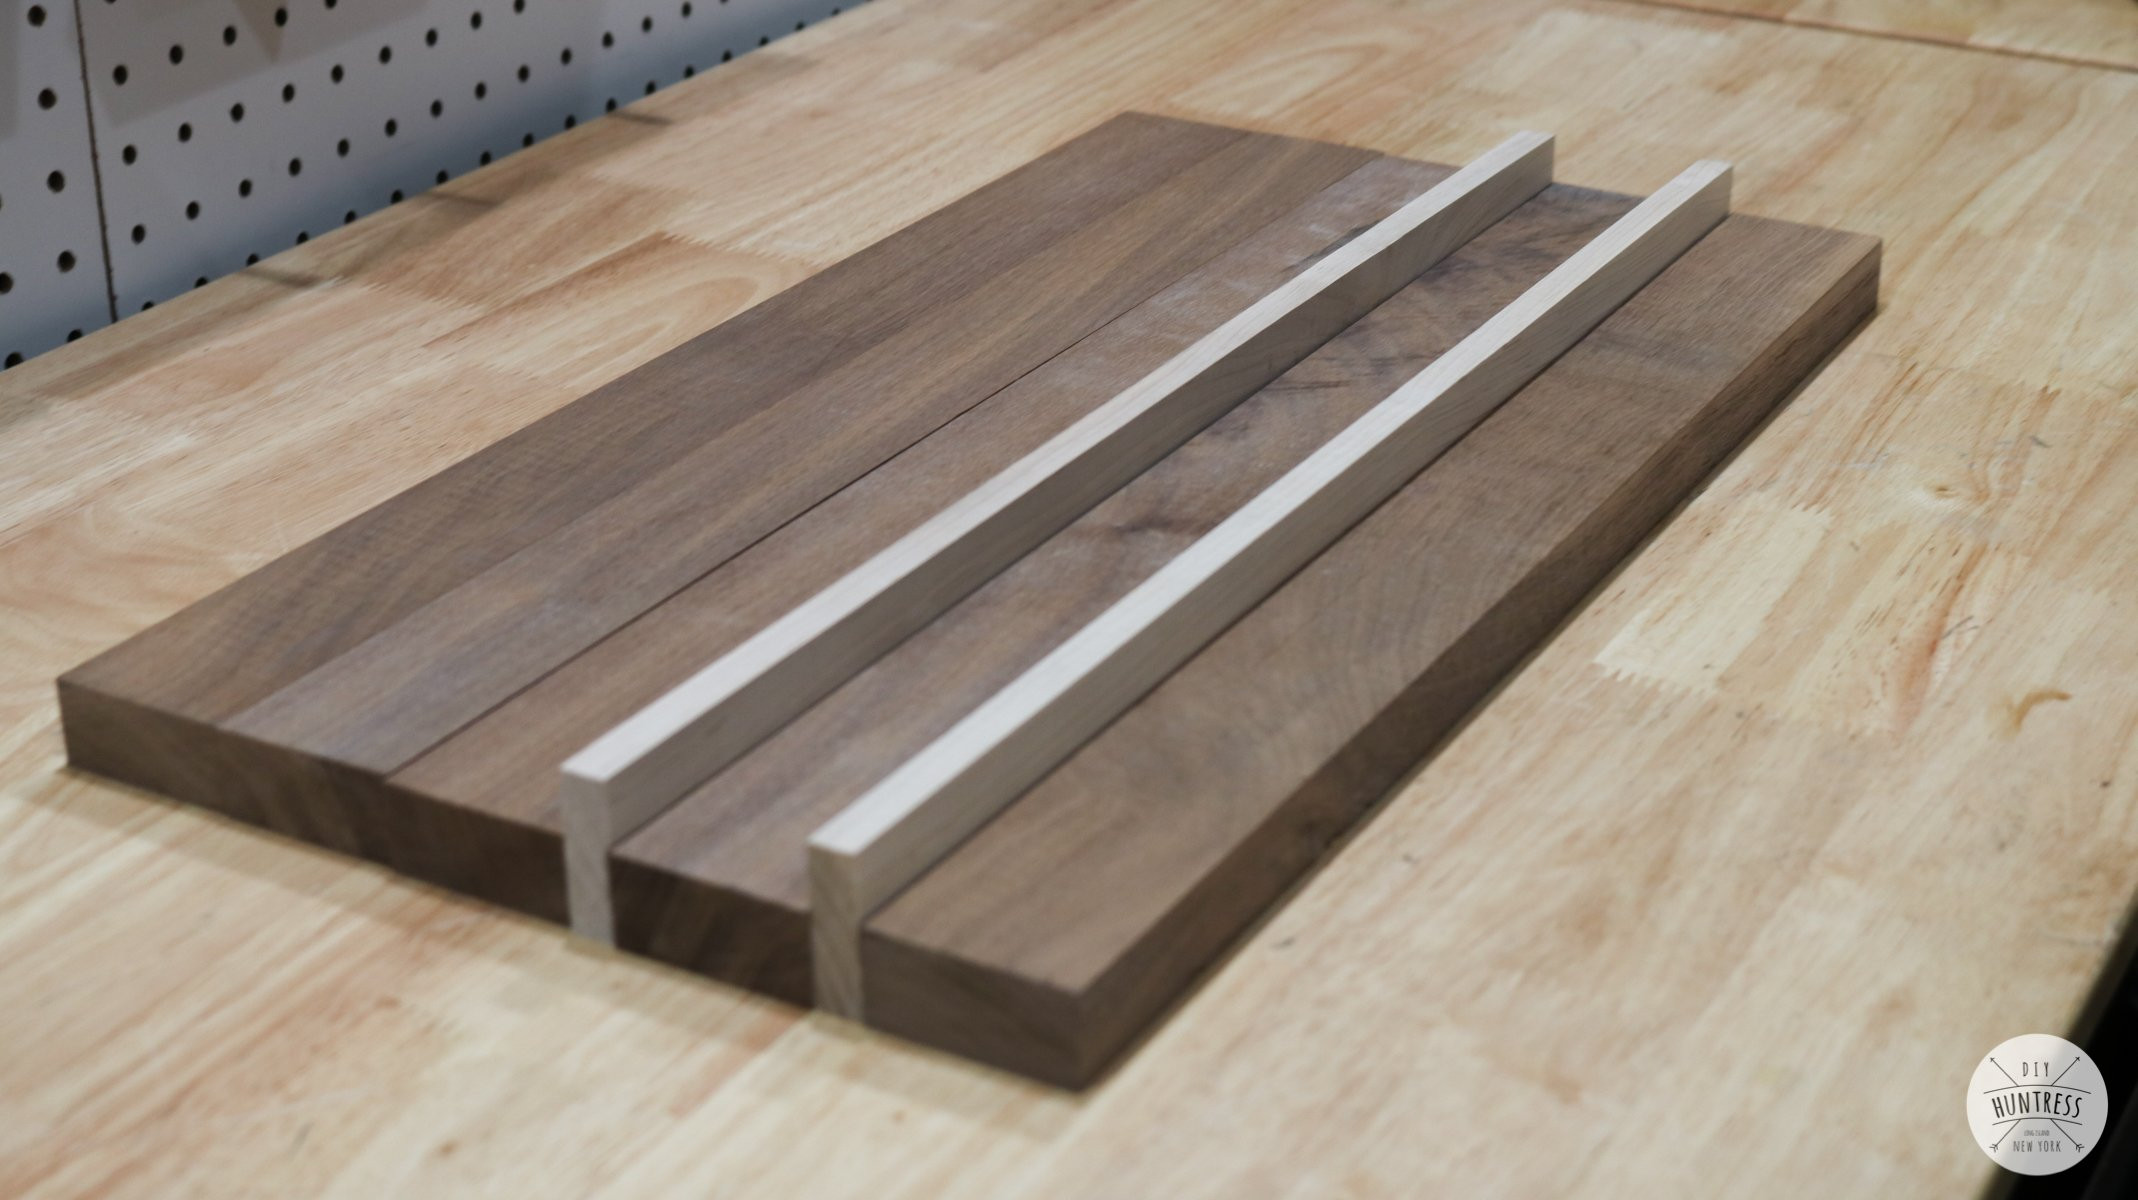 DIY Wood Cutting Board
 DIY Wood Cutting Board No Planer DIY Huntress